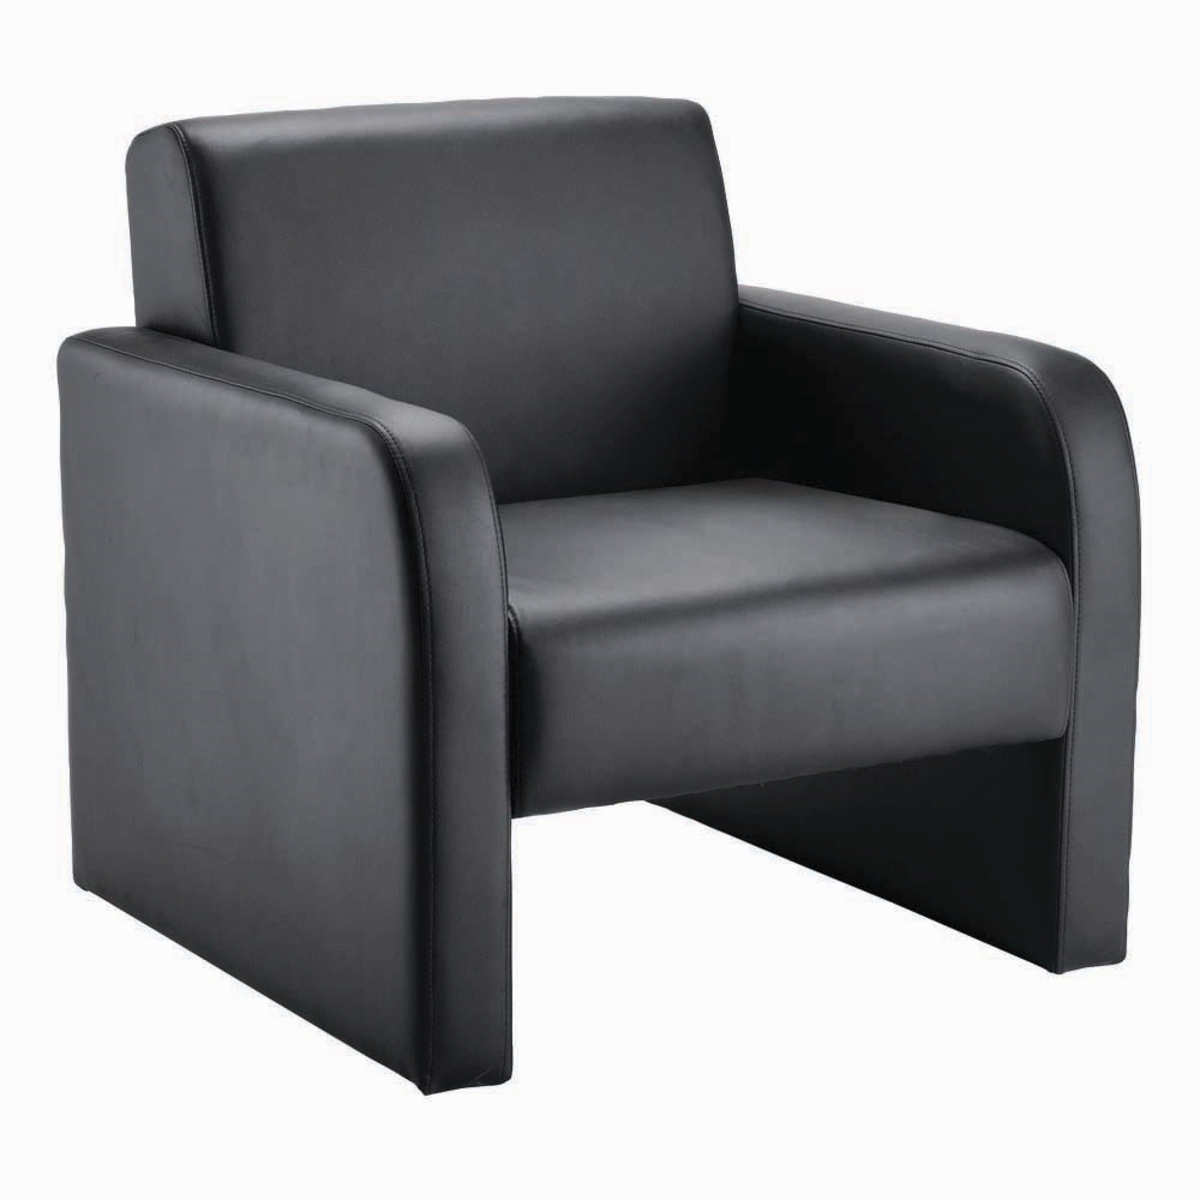 Arista Black Reception Chair Flat Pack Costco Uk